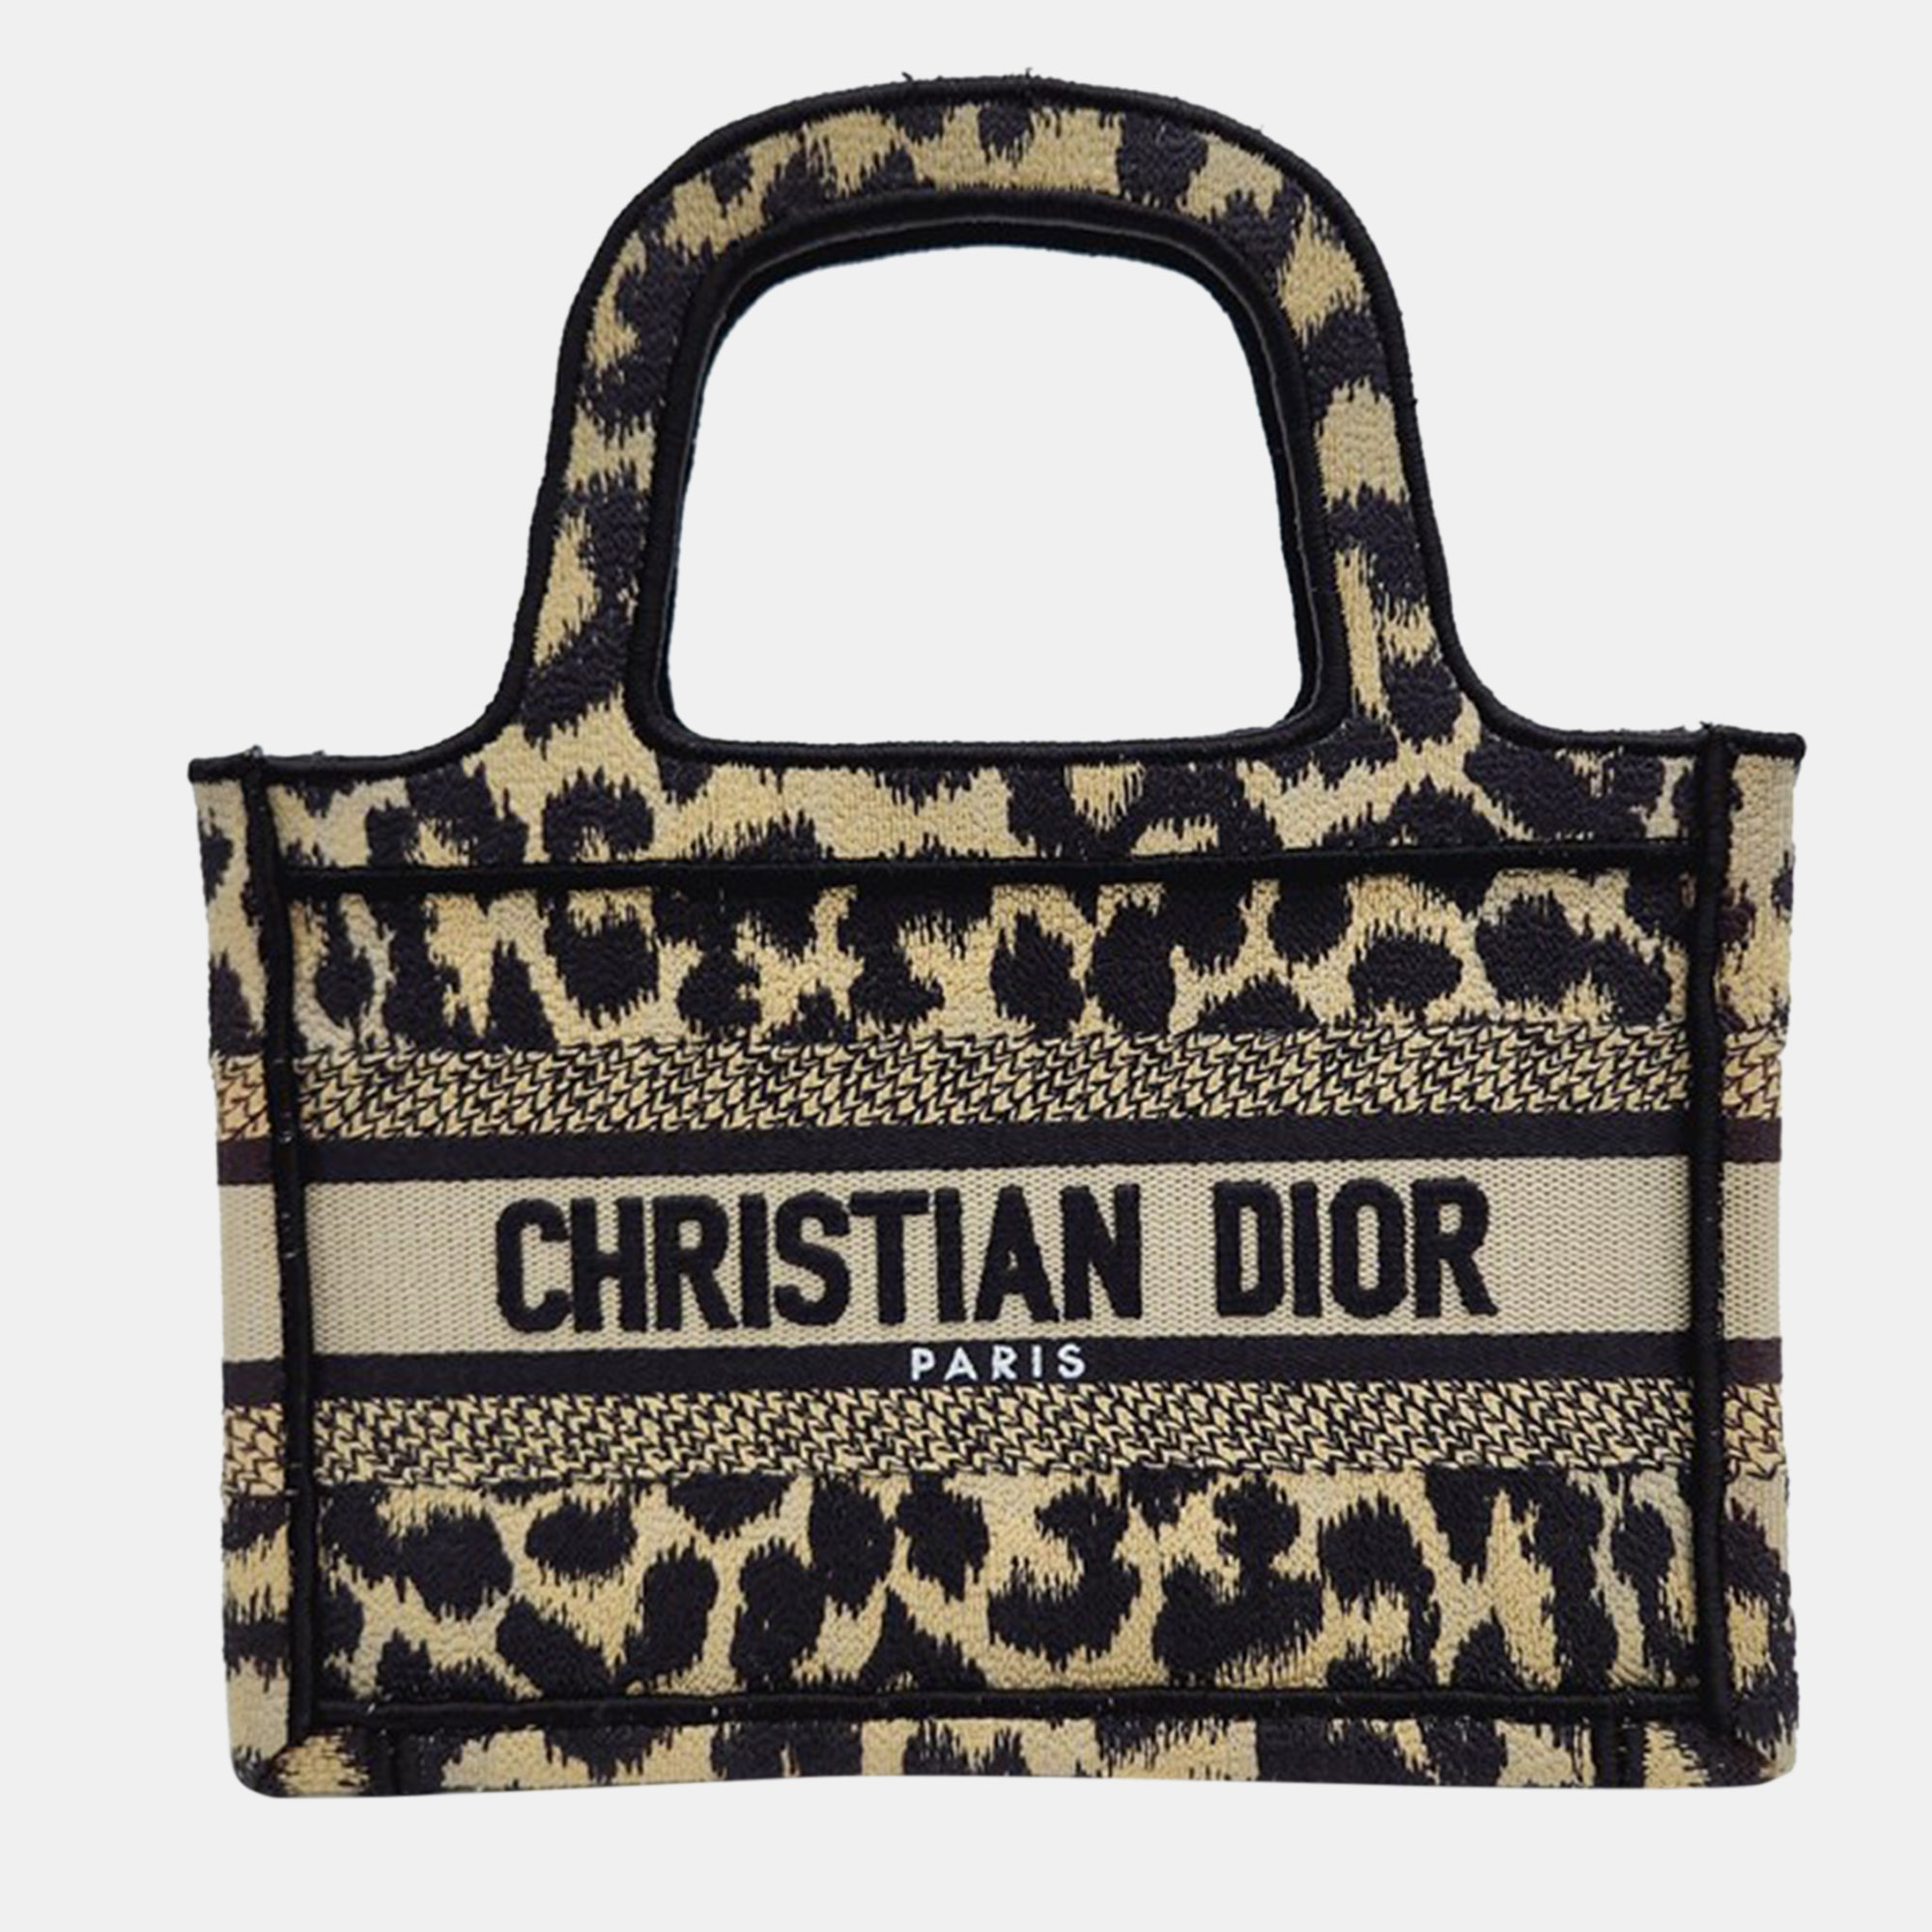 Christian dior mini book tote bag